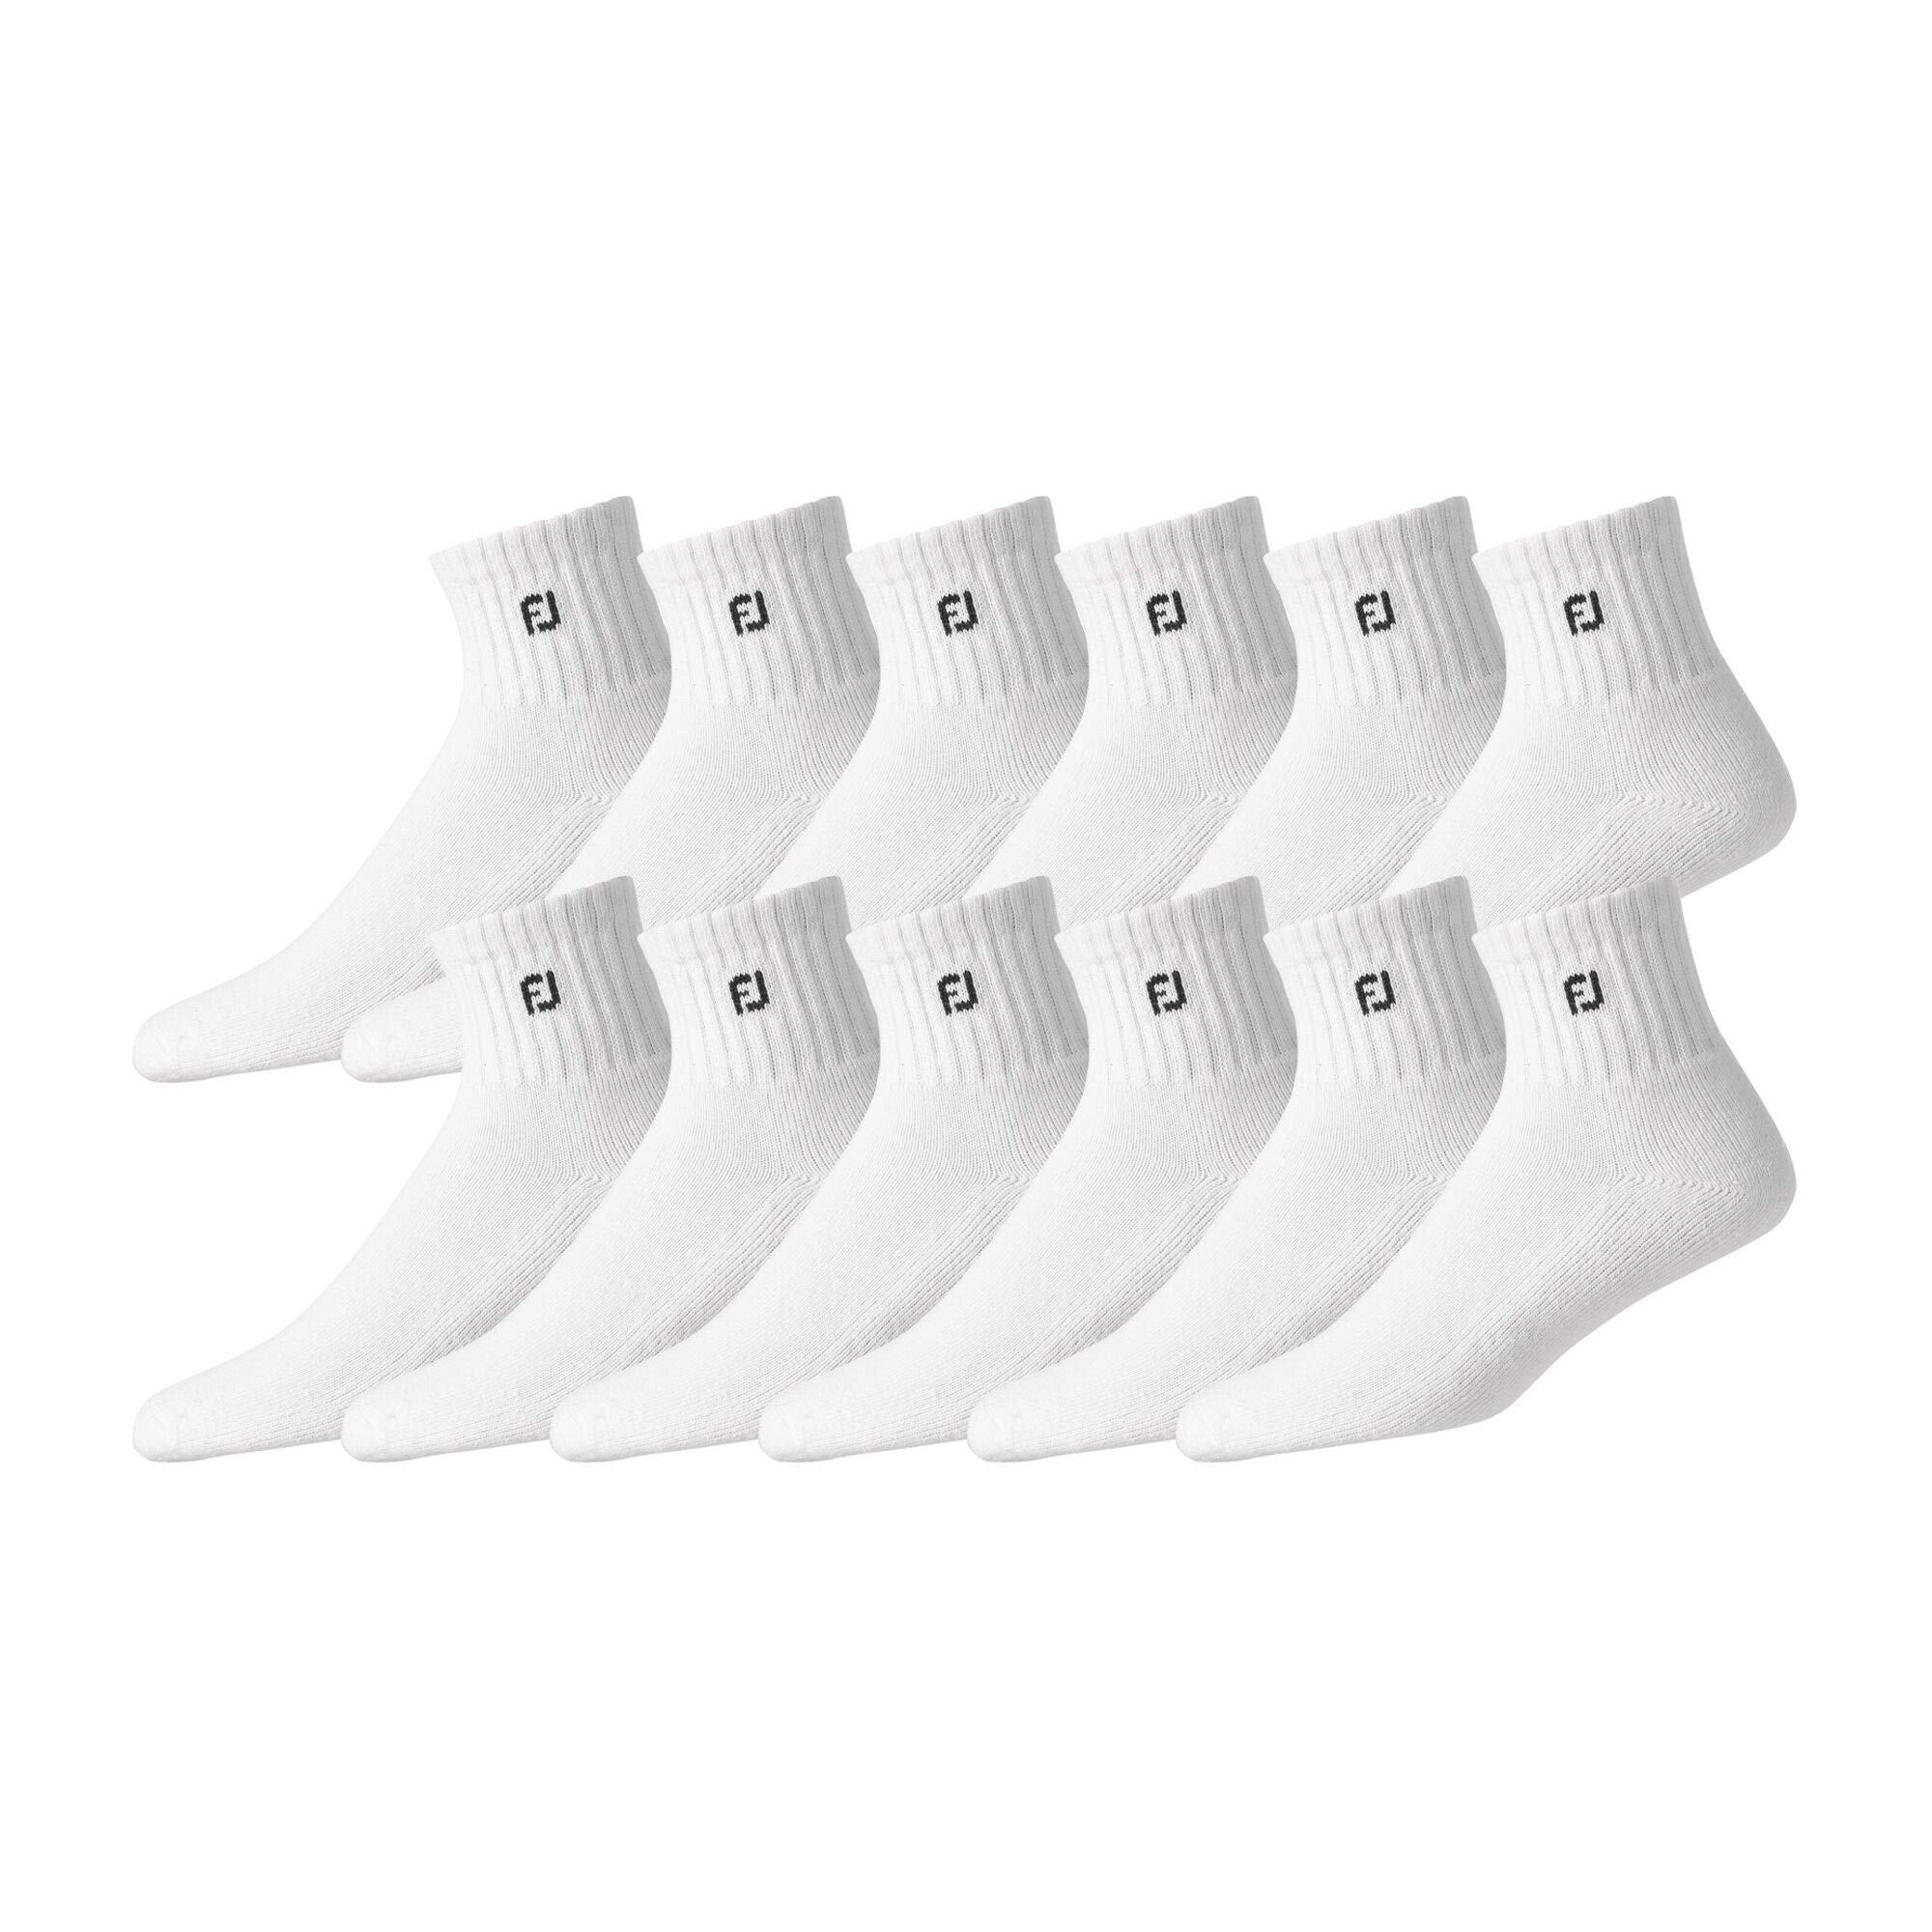 12-Pairs FootJoy Men's ComfortSof Socks (White, Quarter Length or Low Cut)